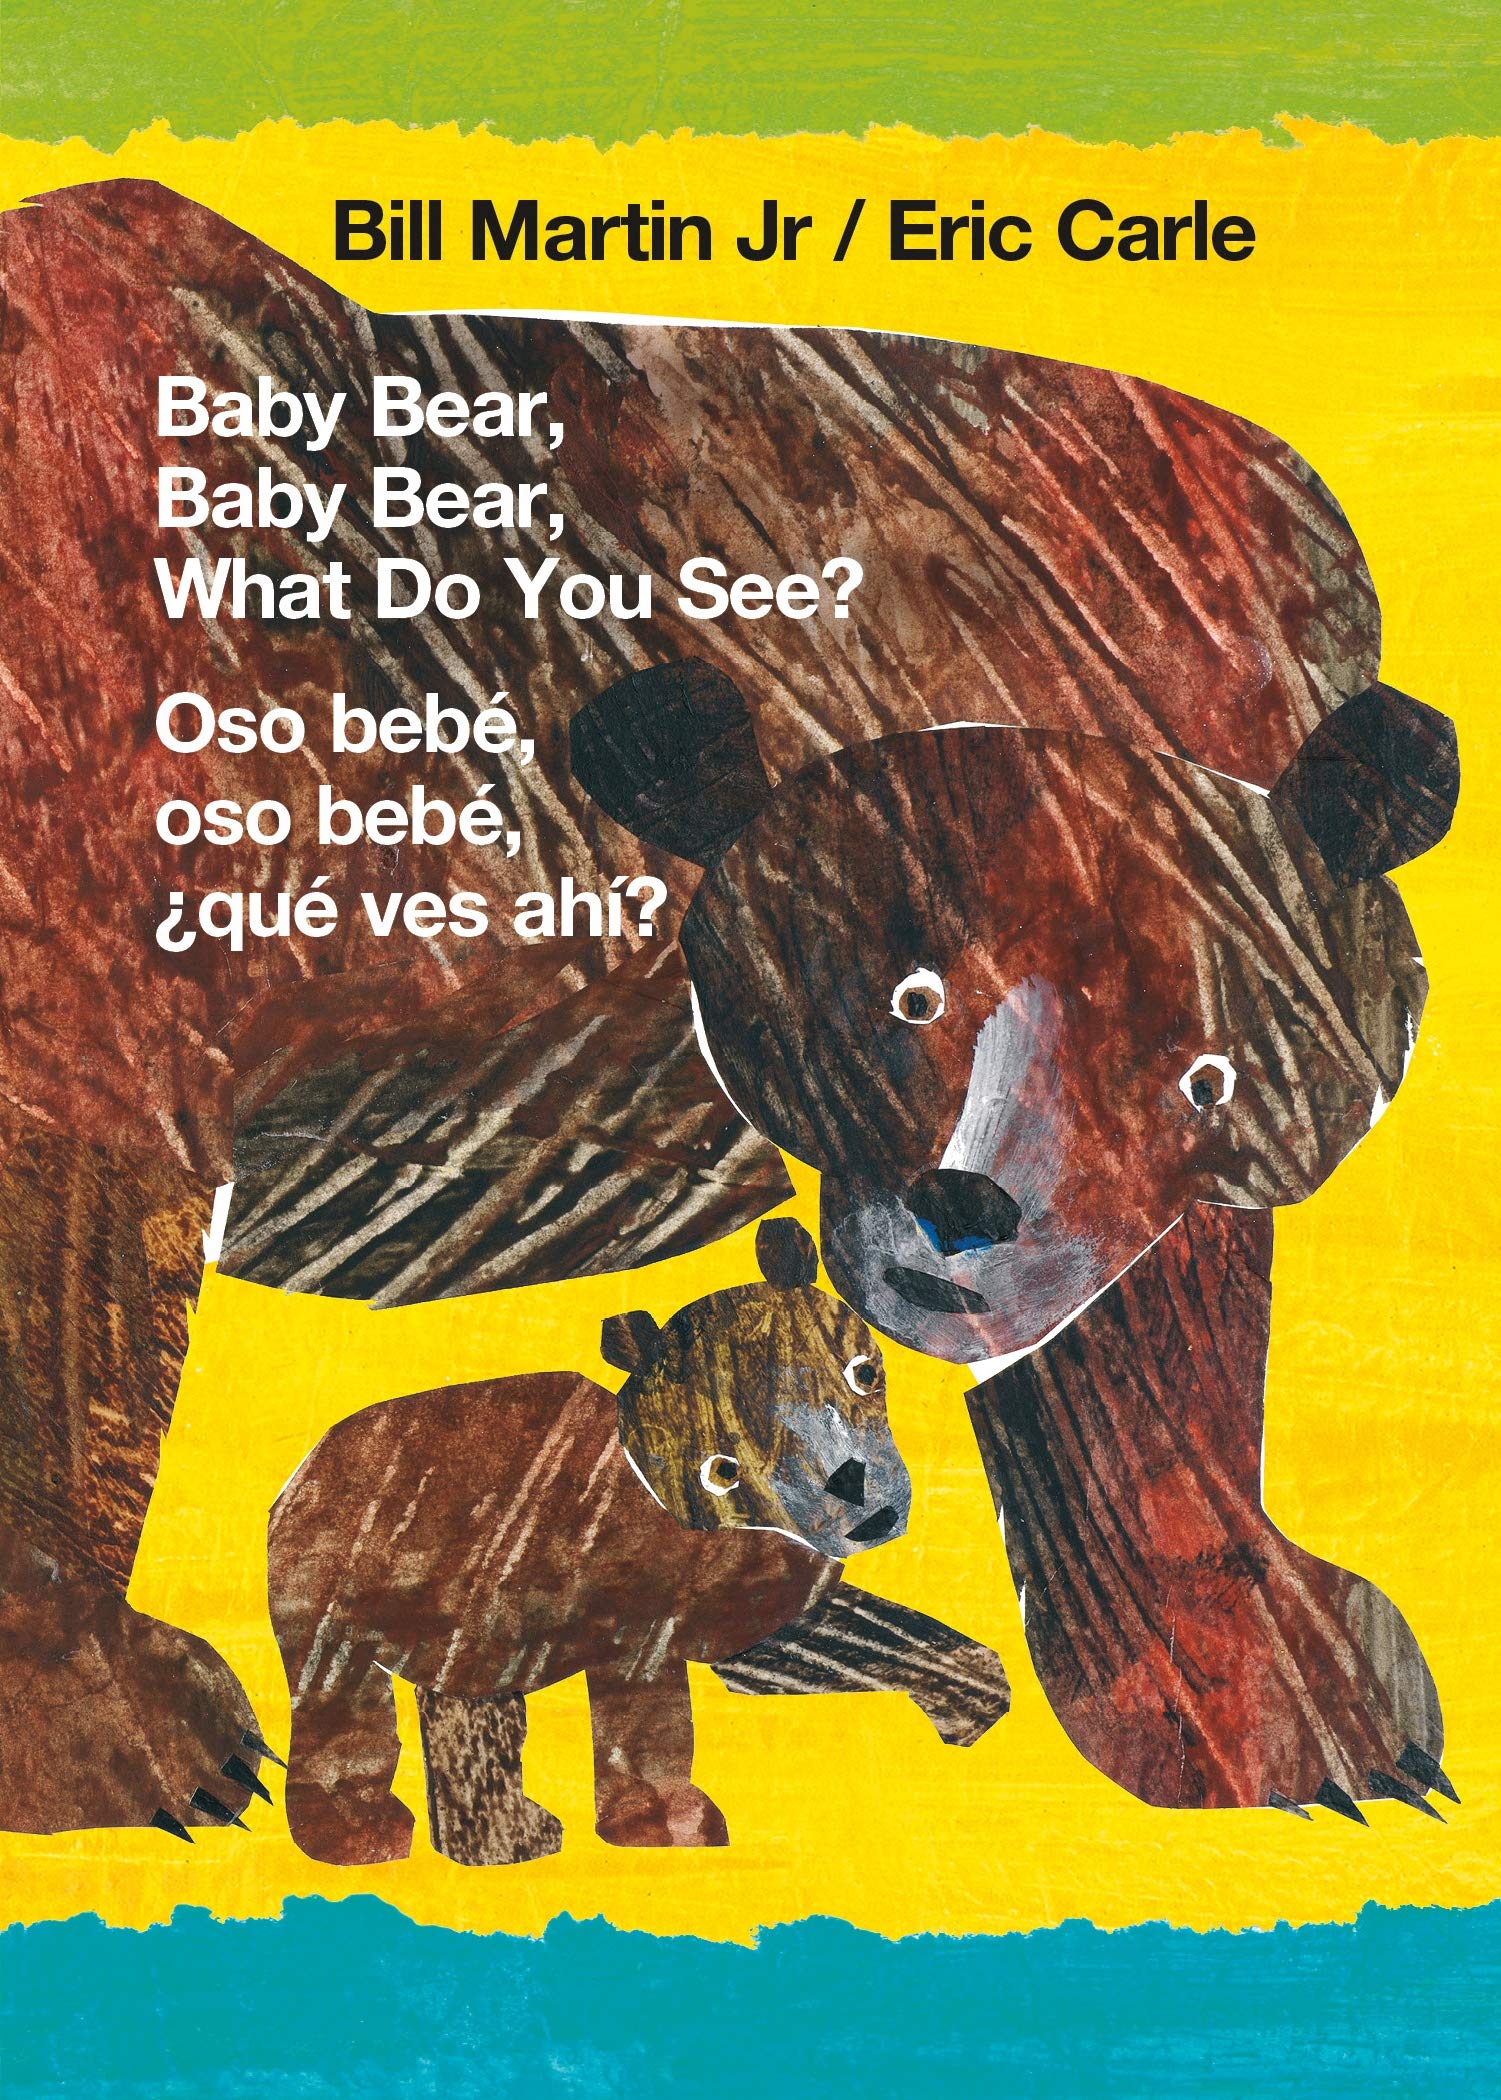 Baby Bear, Baby Bear, What Do You See? / Oso bebé, oso bebé, ¿qué ves ahí? (Bilingual board book - English / Spanish) (Brown Bear and Friends, 1)